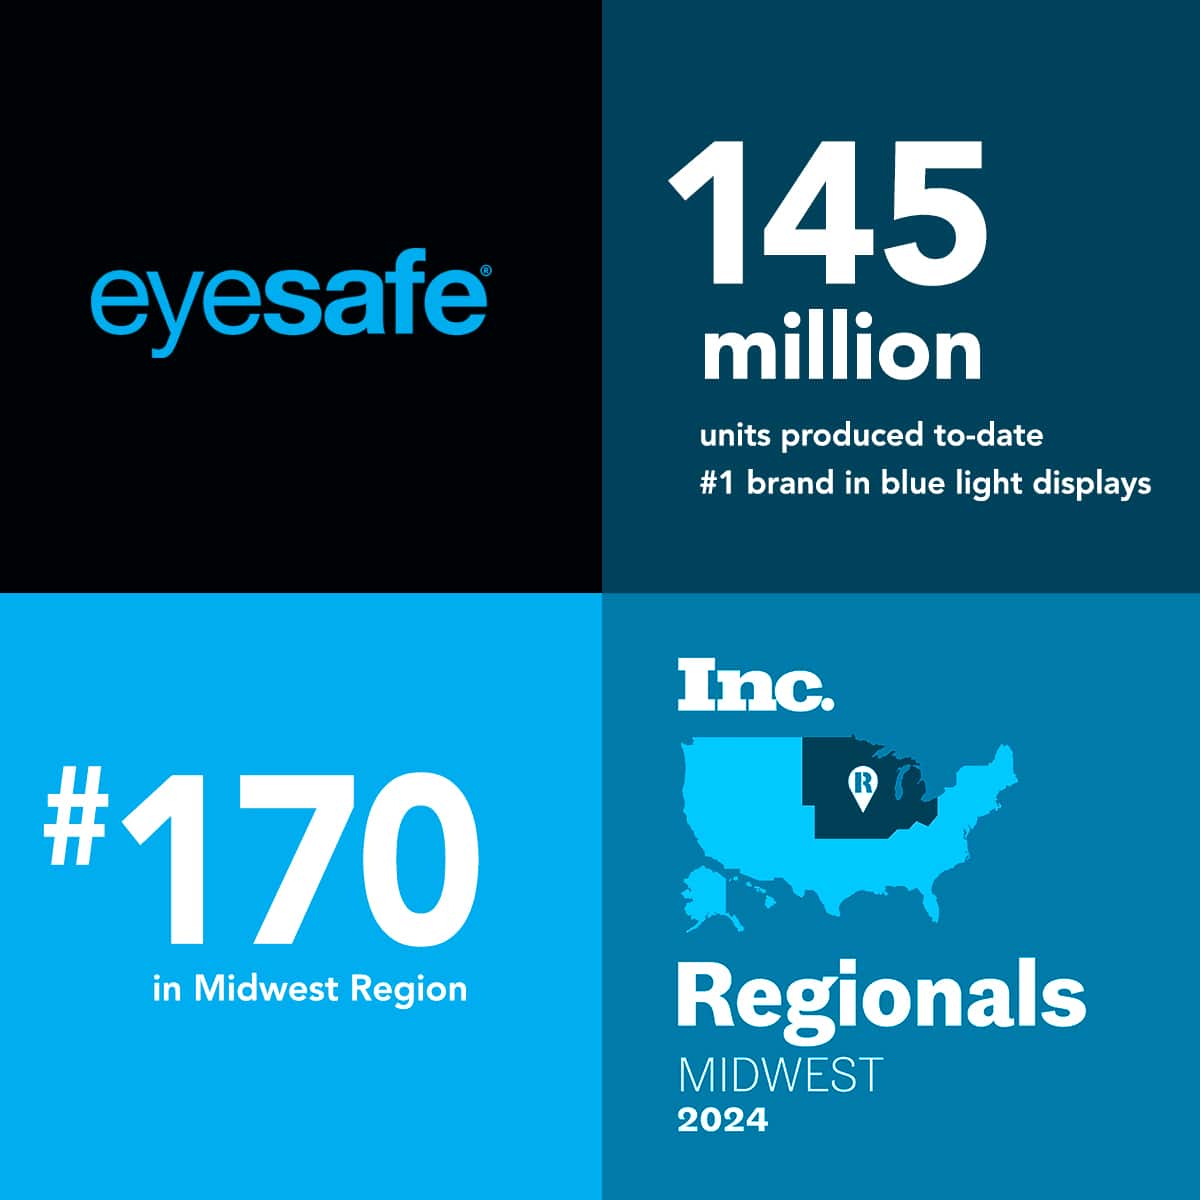 Eyesafe makes Inc Regionals list